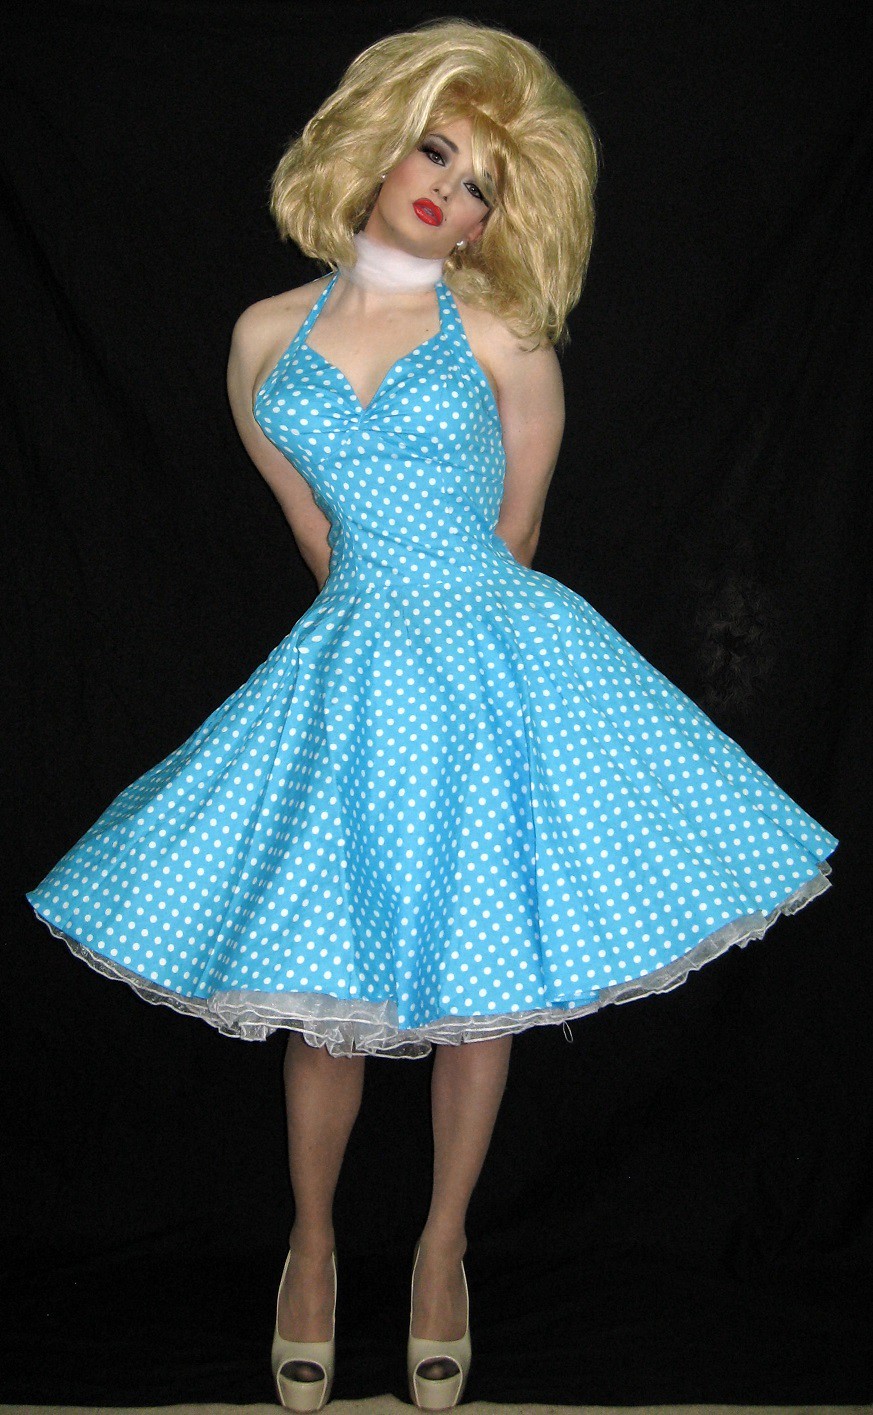 Crinoline Petticoats -- The Ultimate In Femininity | Flickr